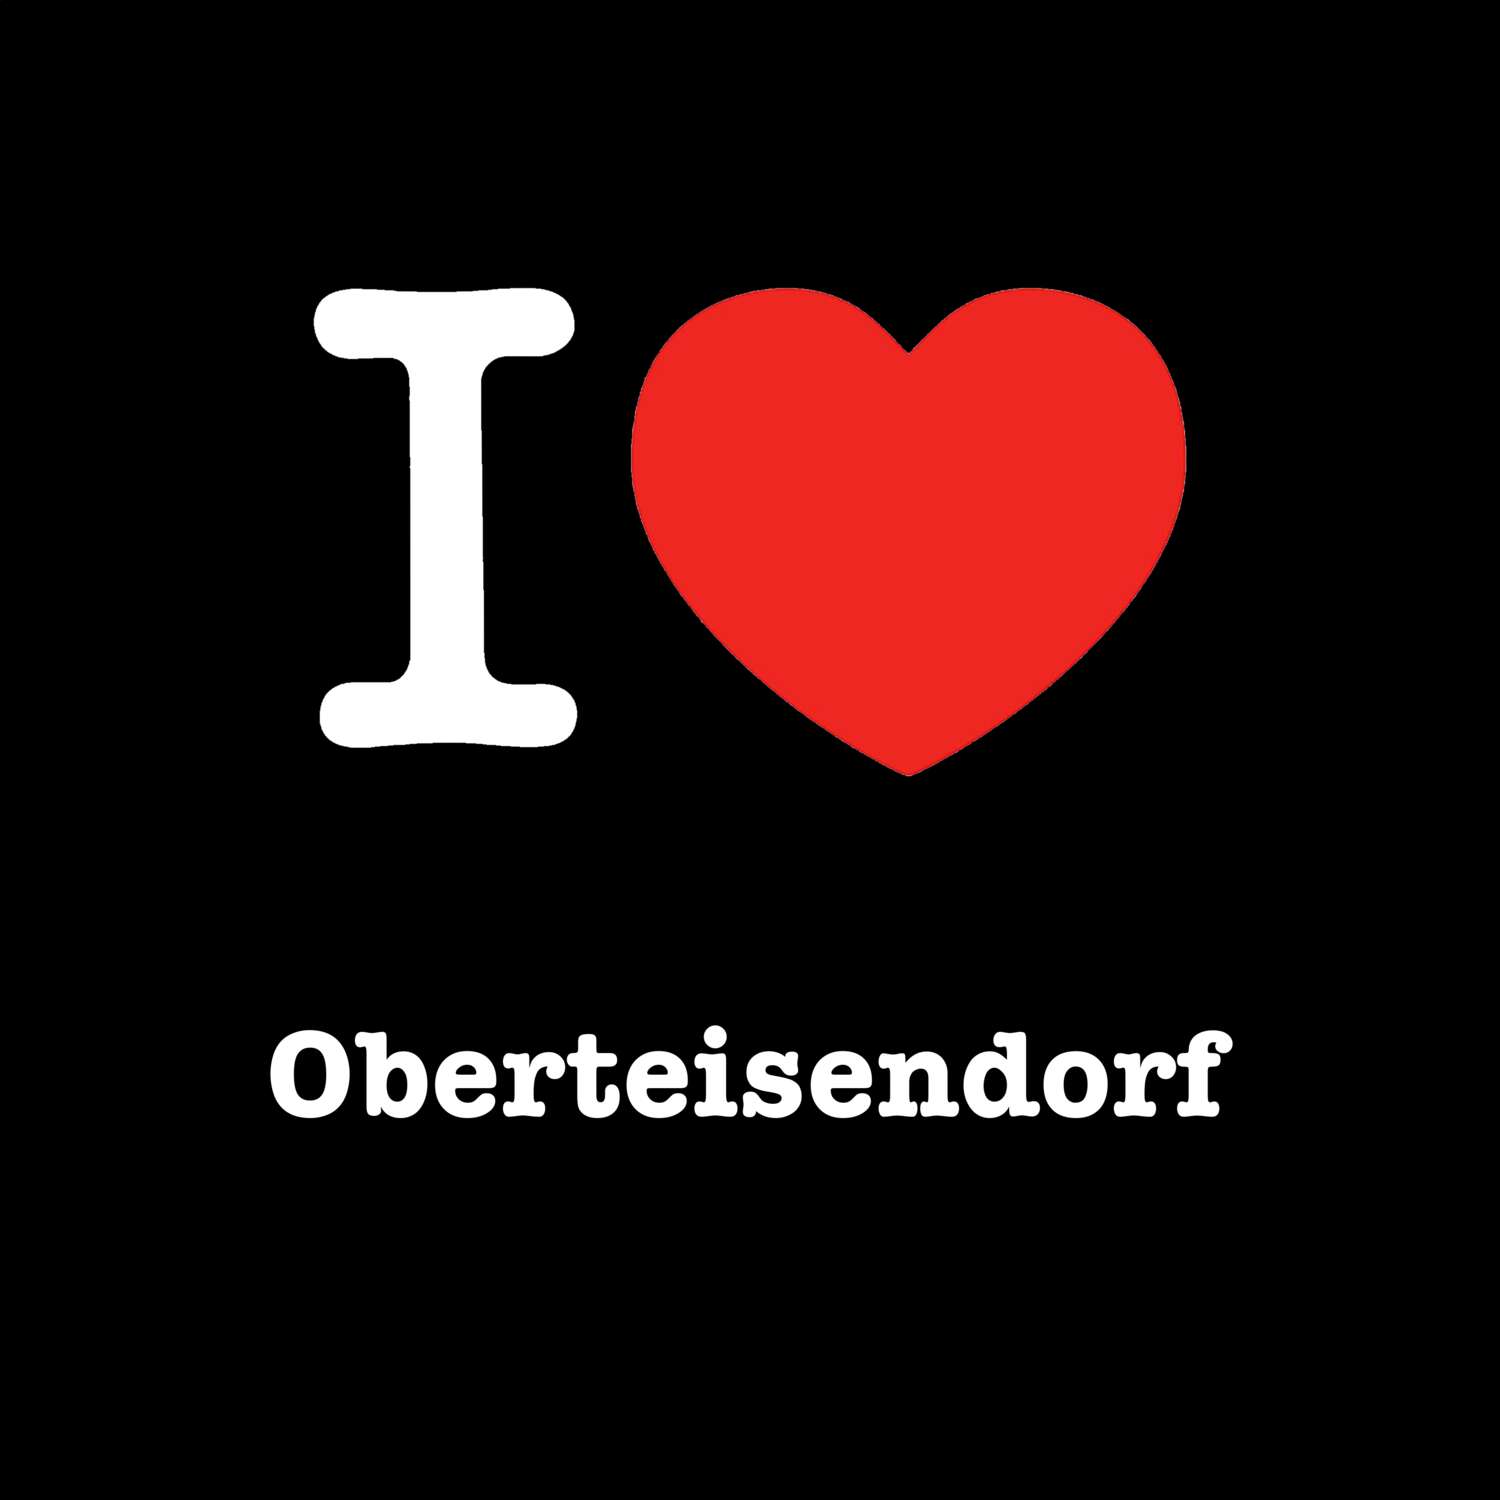 Oberteisendorf T-Shirt »I love«